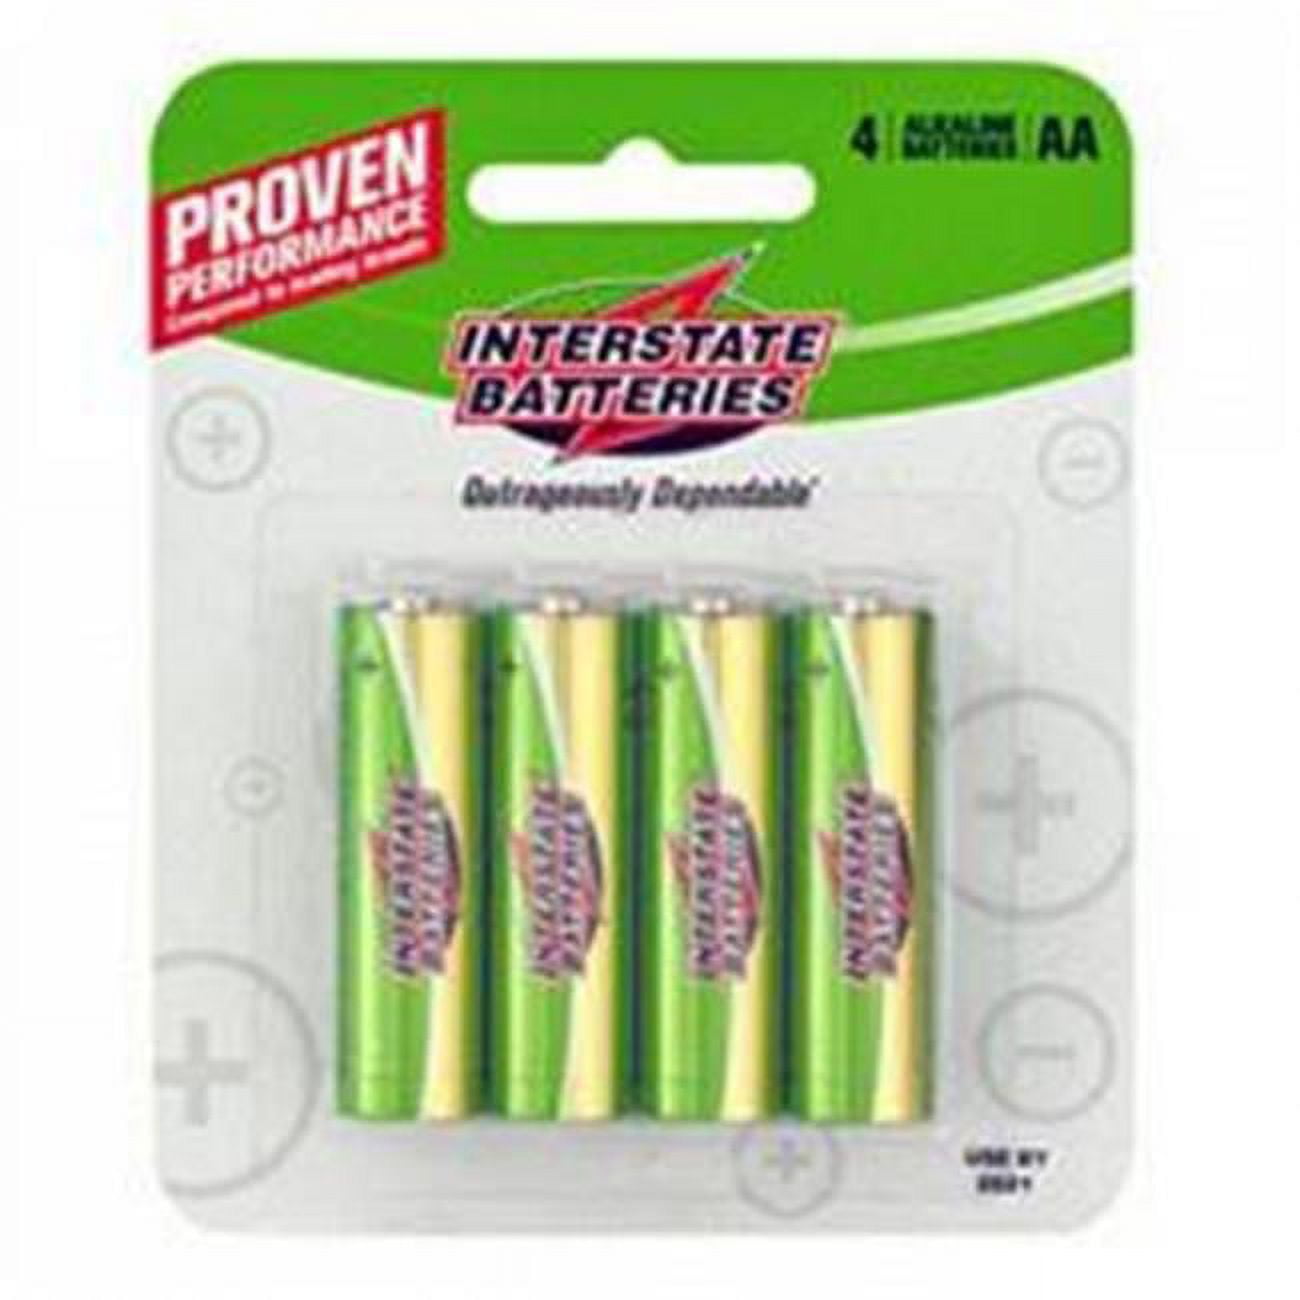 1.5V Alkaline AA Batteries, Pack of 4 -  Interstate Batteries, IN85269